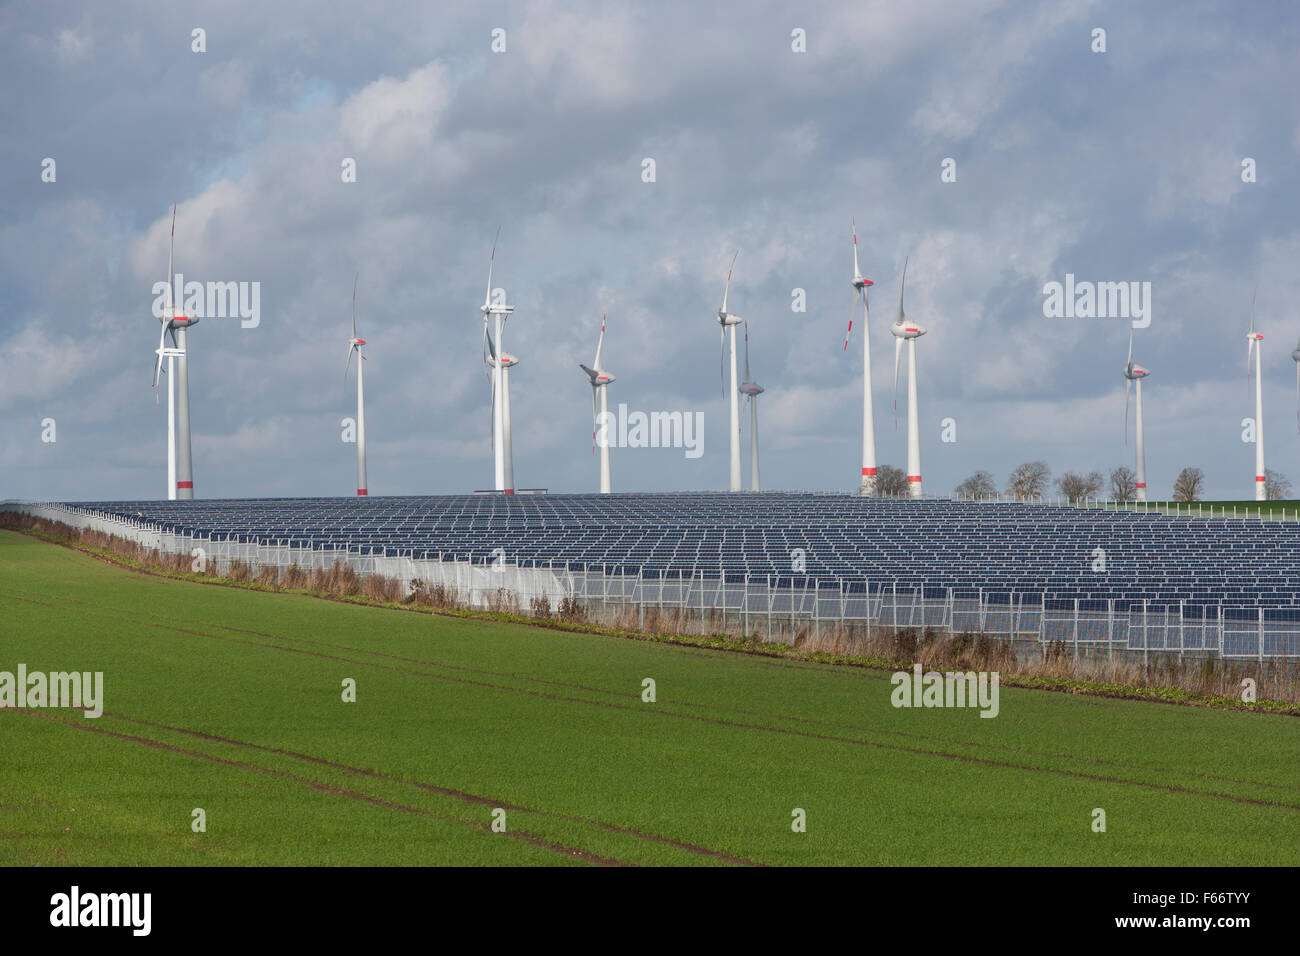 renewable energy at a20 motorway, mecklenburg-western pomerania, germany Stock Photo